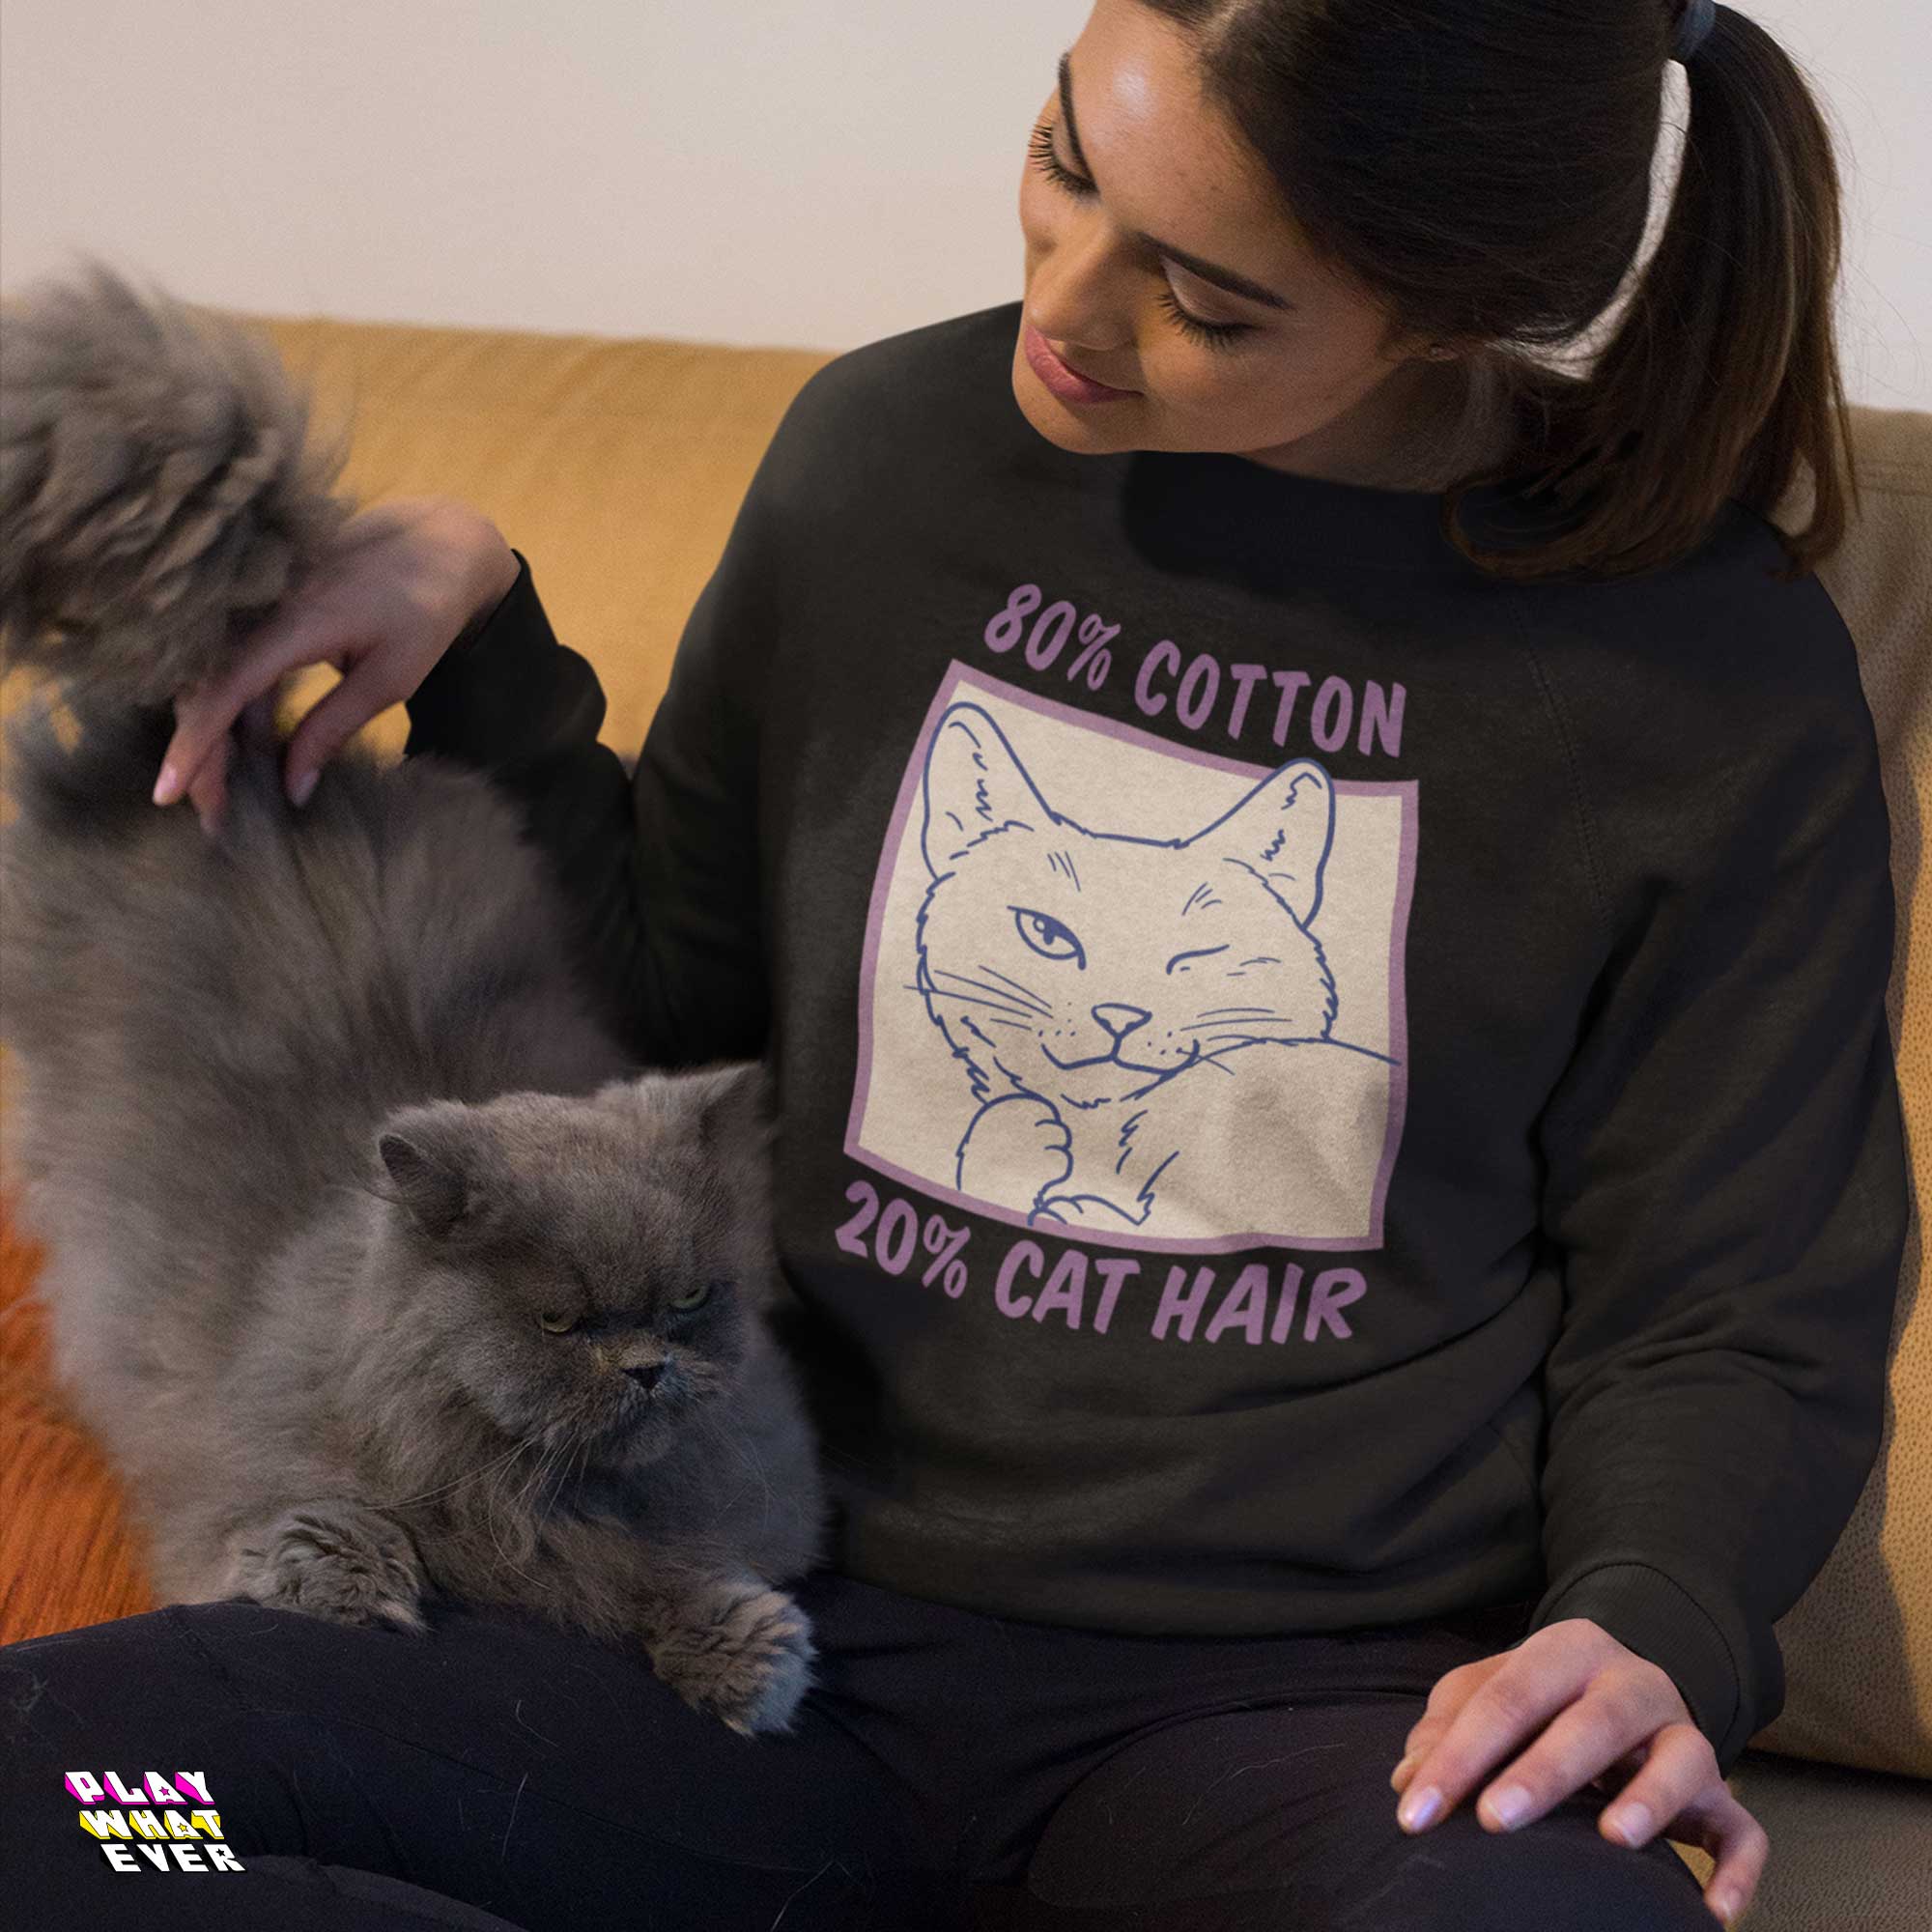 PeppermintOne 80% Cotton 20% Cat Hair Funny Cat Sweatshirt